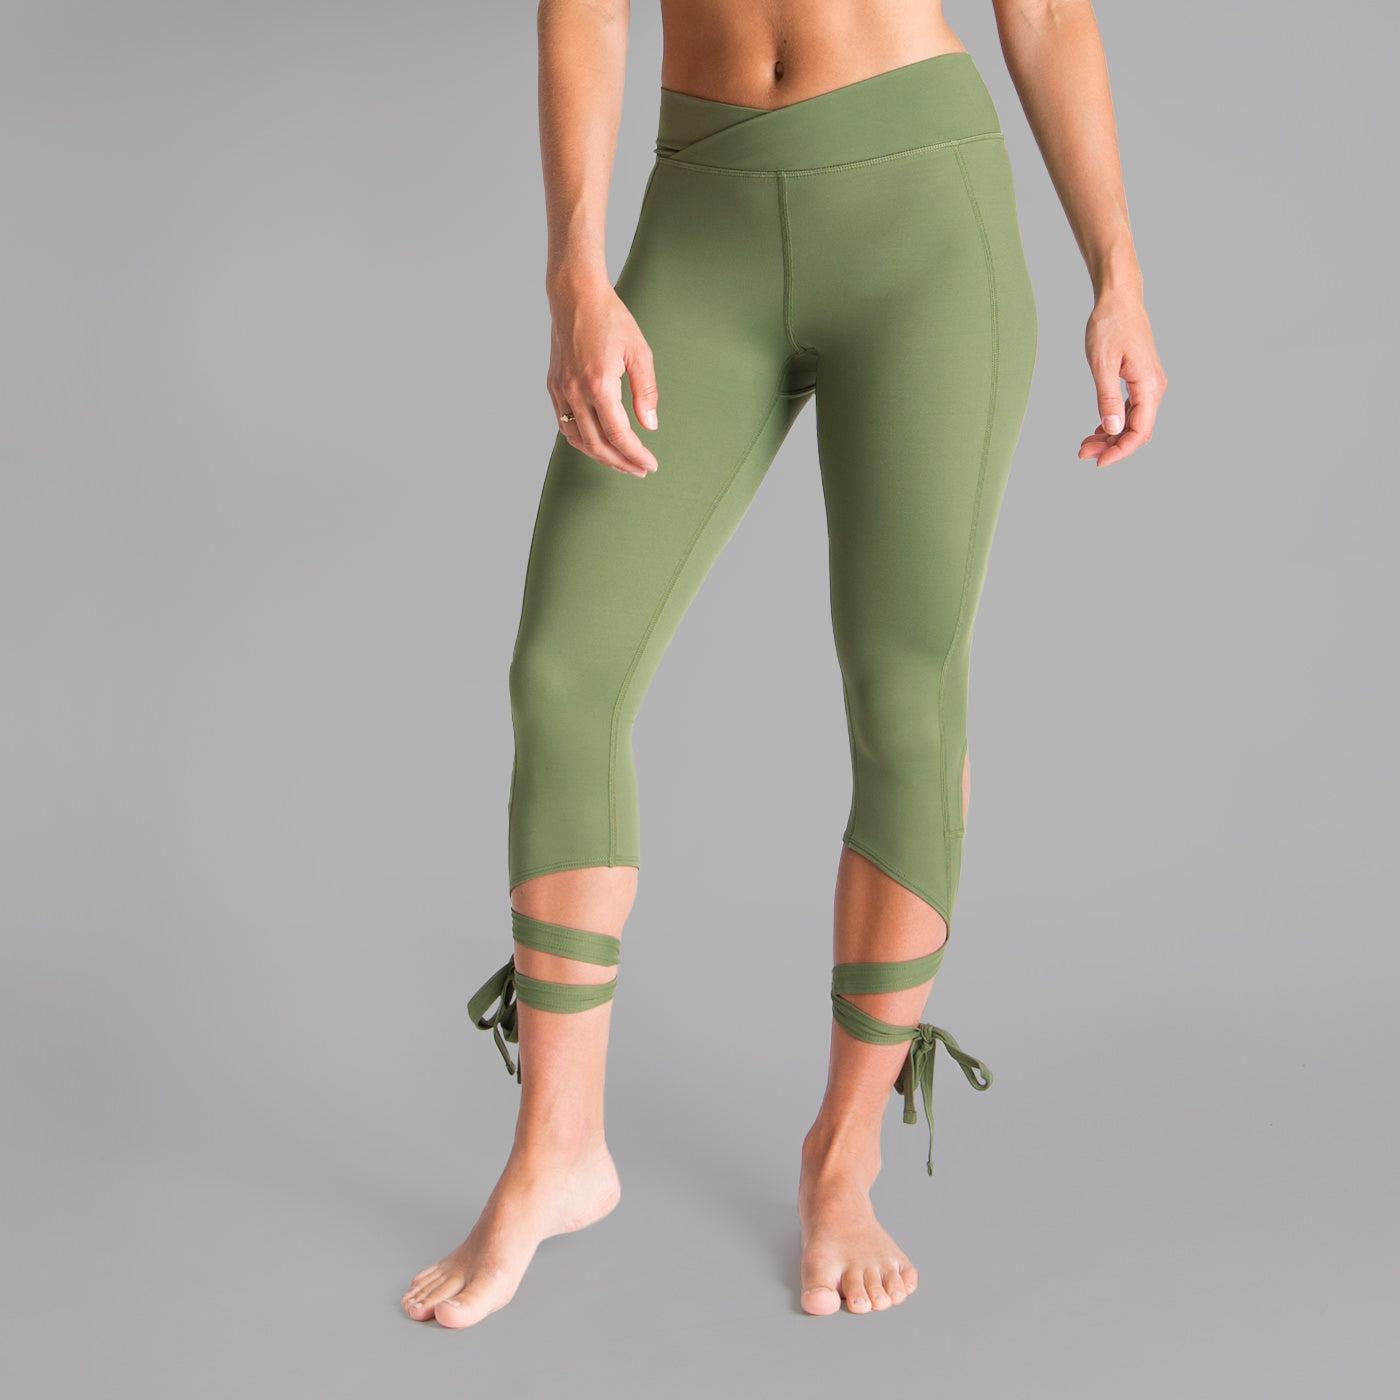 You've Got This Legging - Military Green - Flō